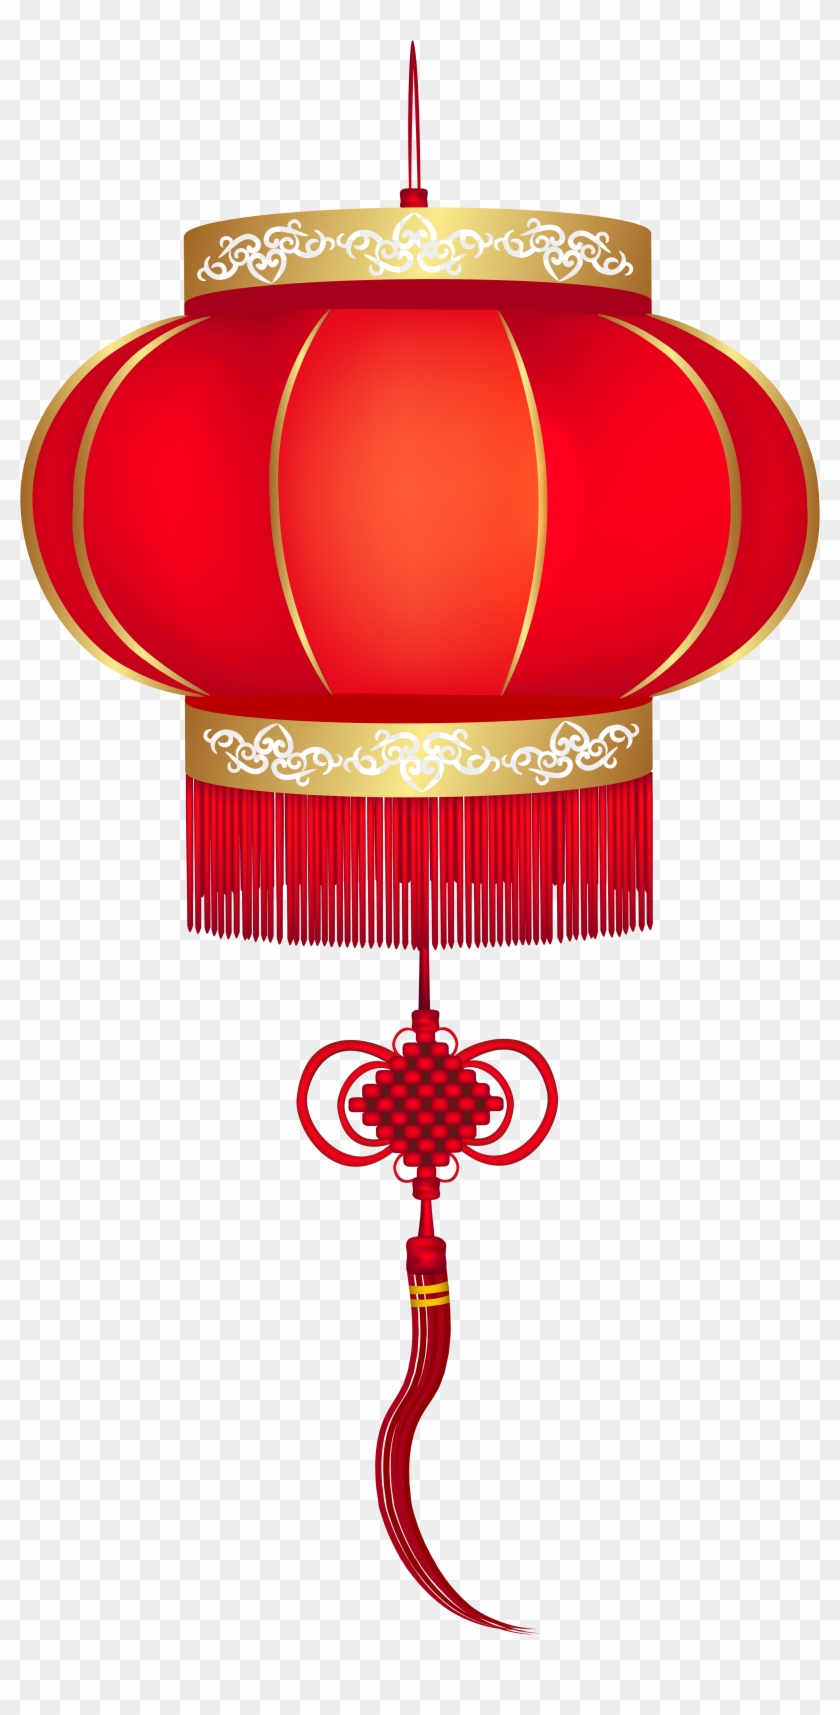 Cheap China Paper Lantern Clip Art Chinese New Year - Cheap China Paper Lantern Clip Art Chinese New Year #420107